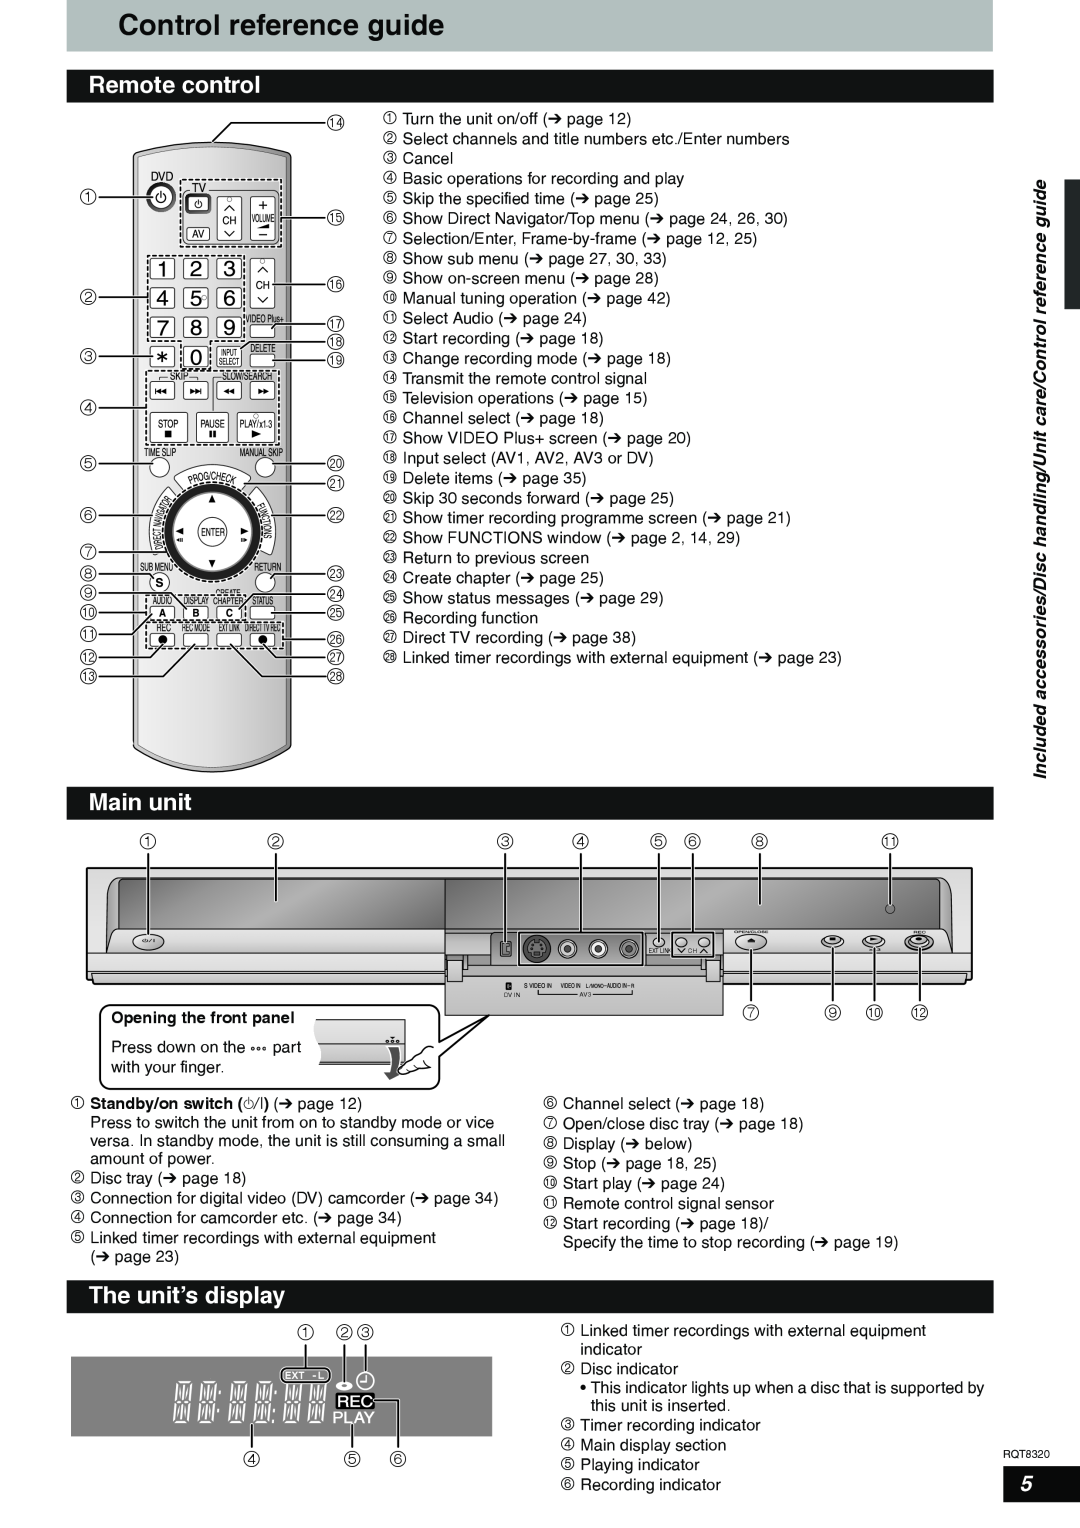 Panasonic DMR-ES15EB manual Control reference guide, Remote control, Main unit, The unit’s display, 7 9 bk bm 